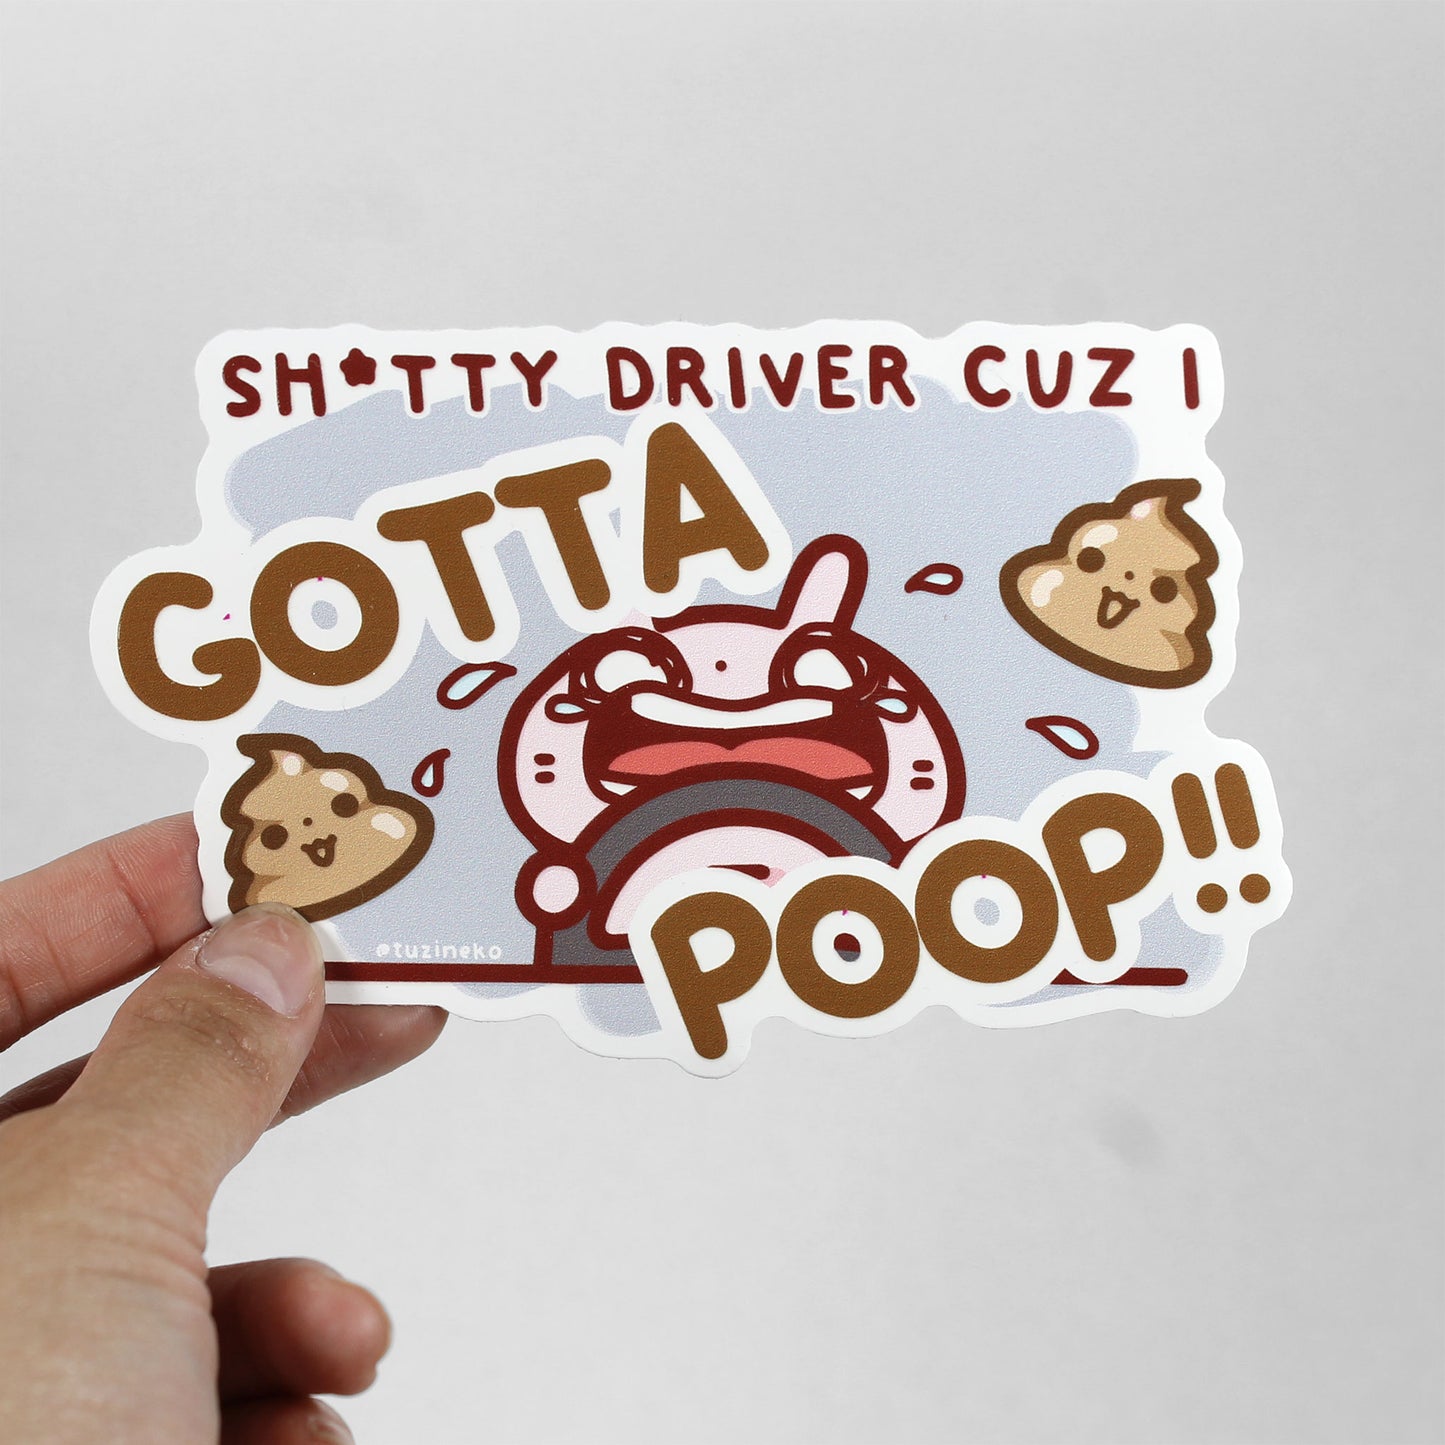 Tuzi "Sh*tty Driver Cuz I Gotta Poop!" Matte Waterproof Car Sticker with Gloss Spot UV